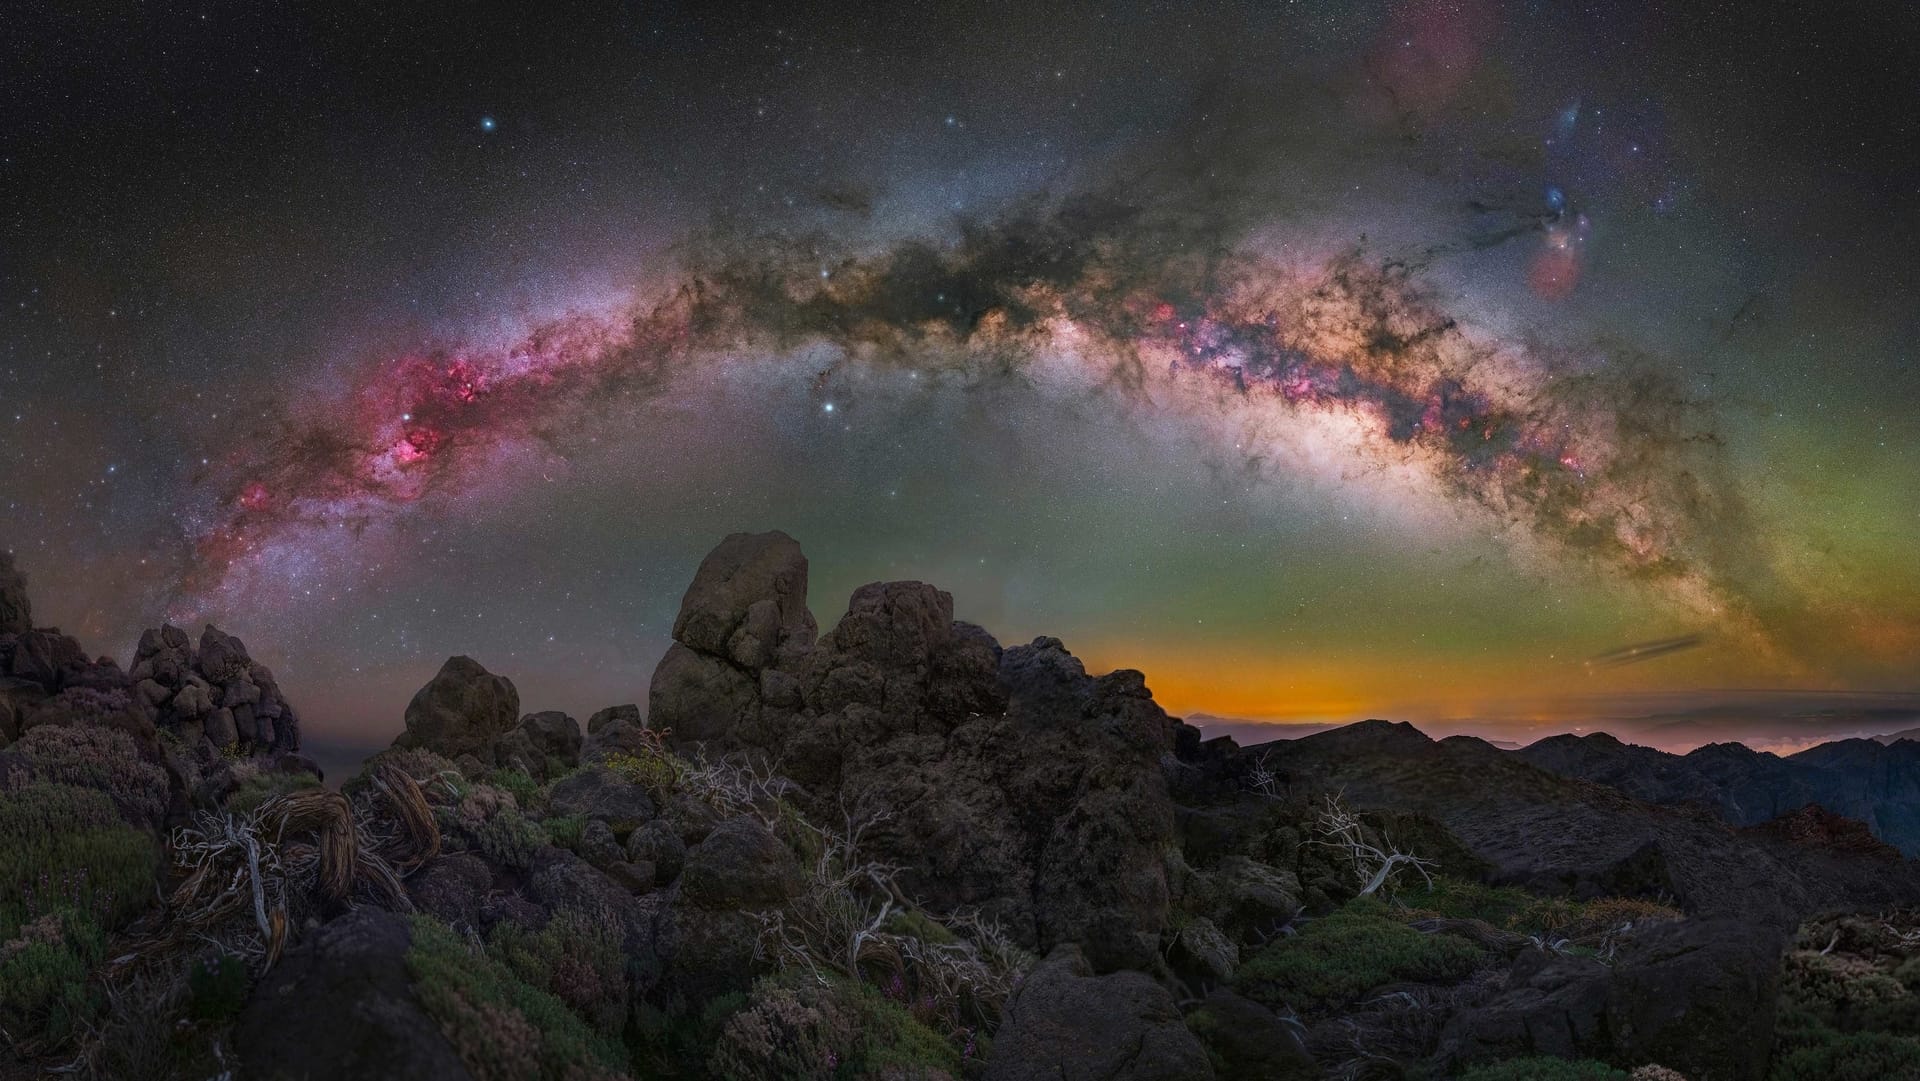 Milky Way photographer of the year La Palma